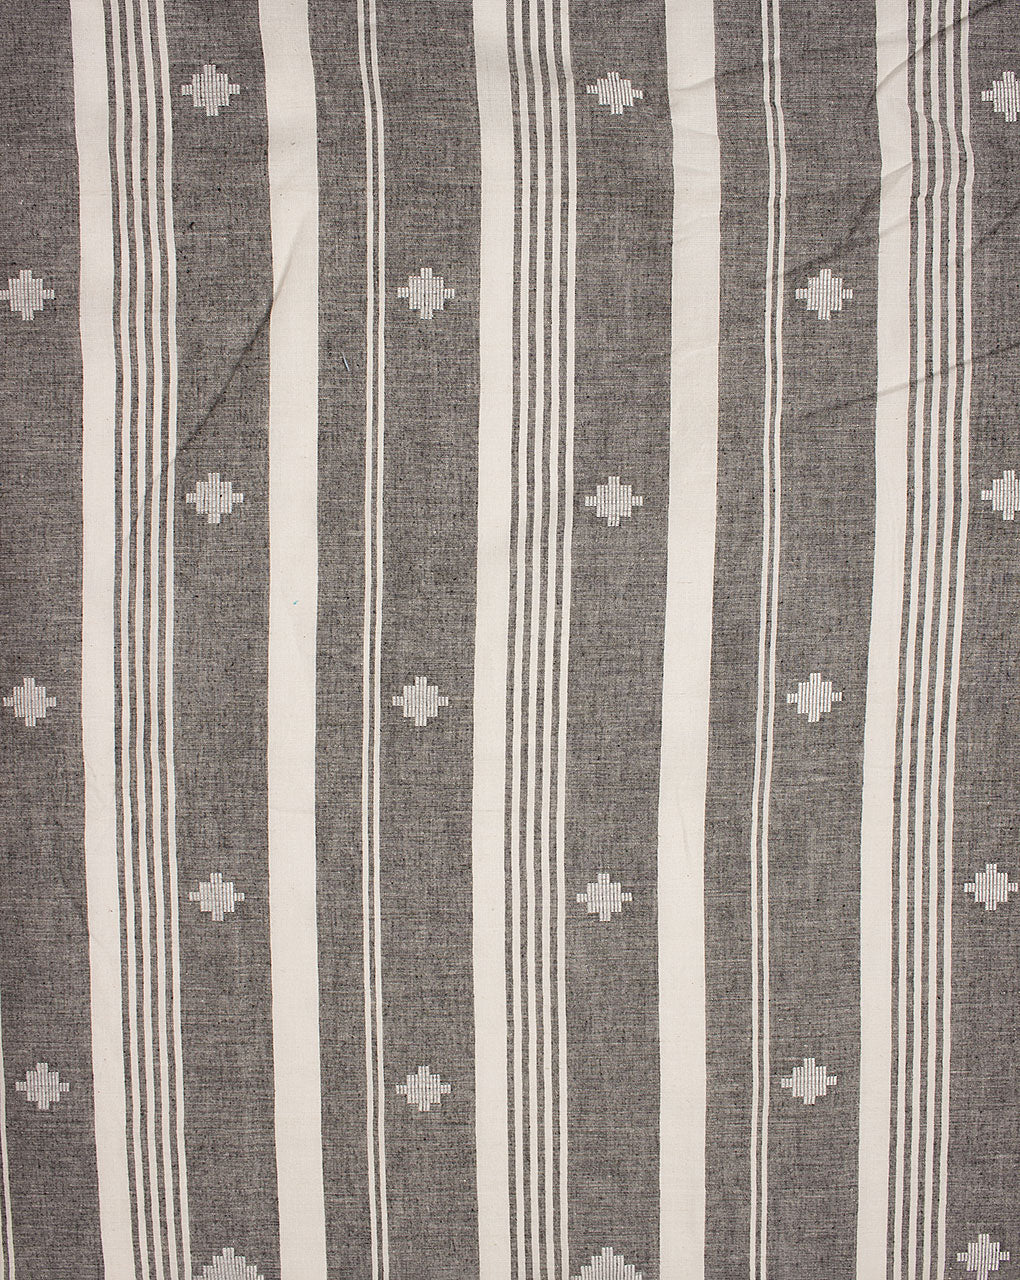 Loom Textured Jacquard Cotton Fabric - Fabriclore.com